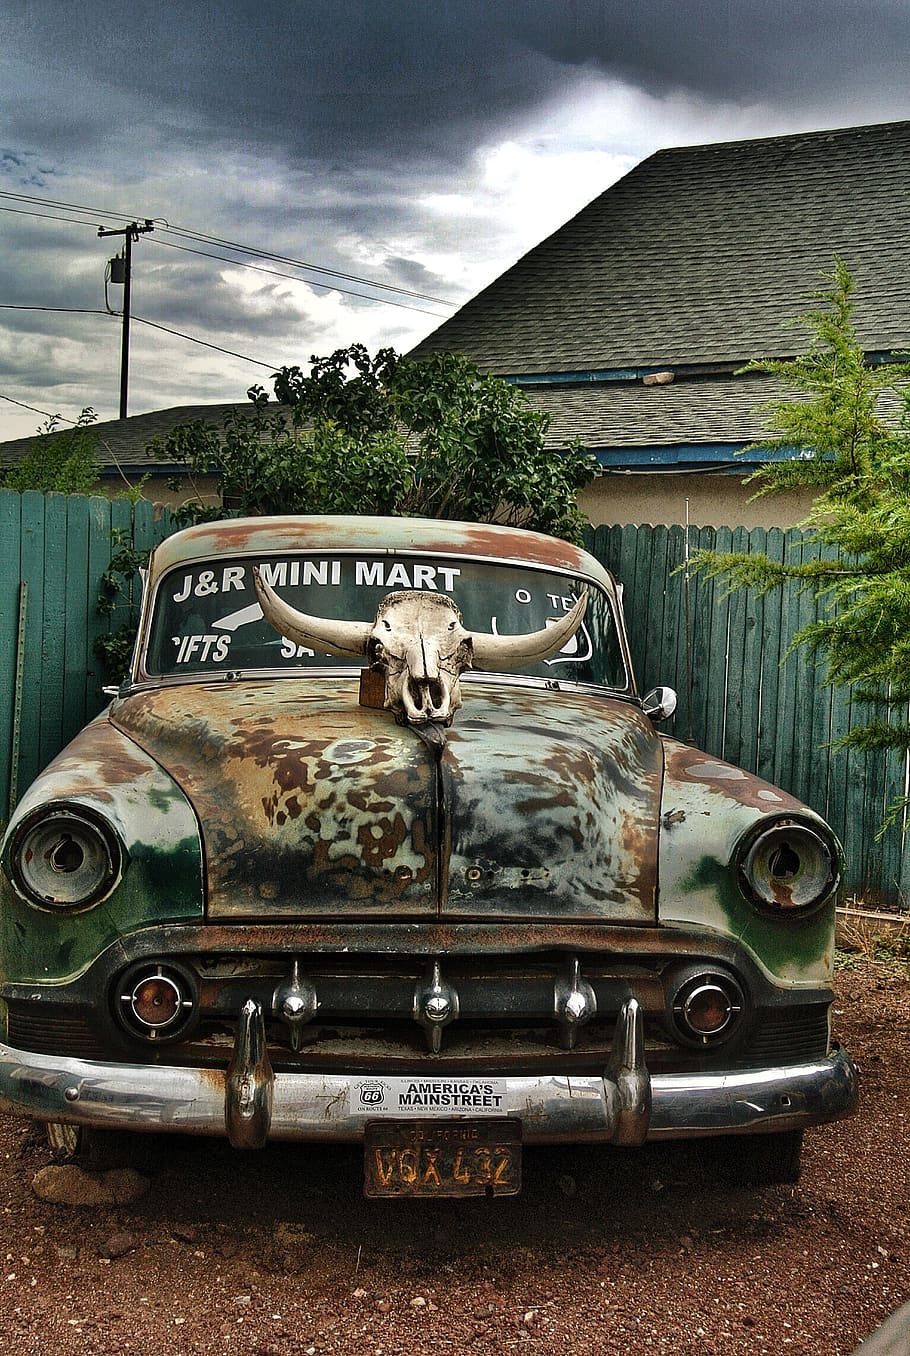 vintage, car, automobile, automotive, abandoned, antique, vehicle, rusty, outside, house